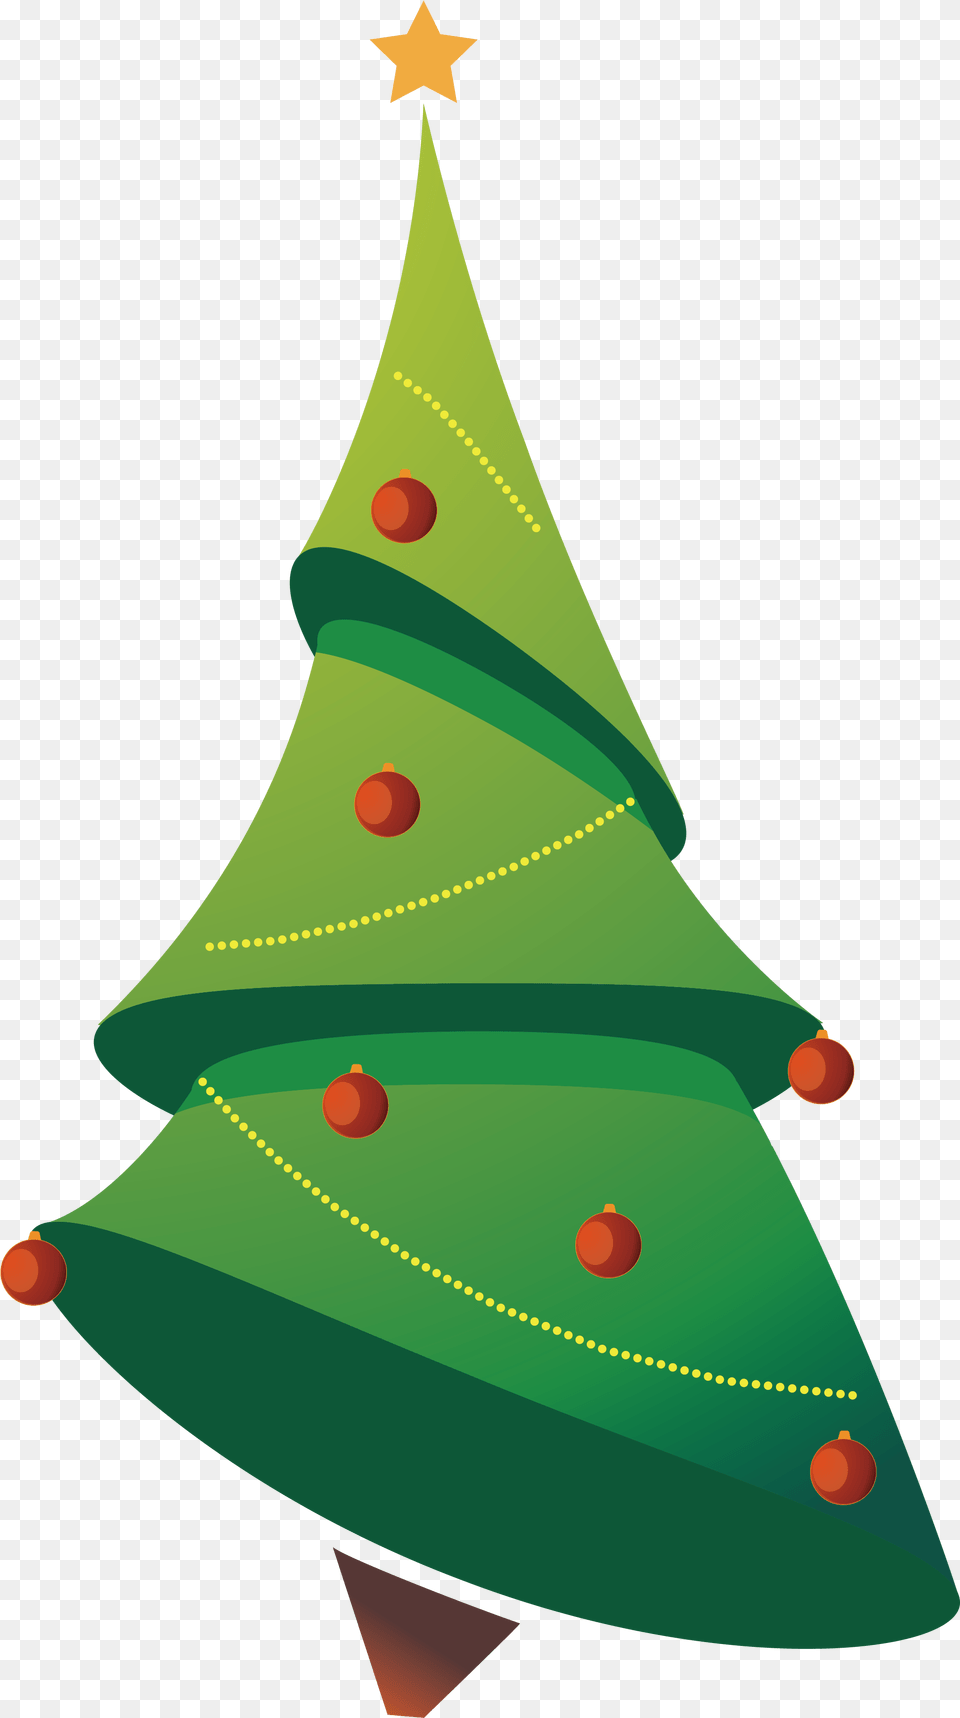 Christmas Tree Vector Image Ideas Vector Christmas Tree, Christmas Decorations, Festival, Christmas Tree, Rocket Png